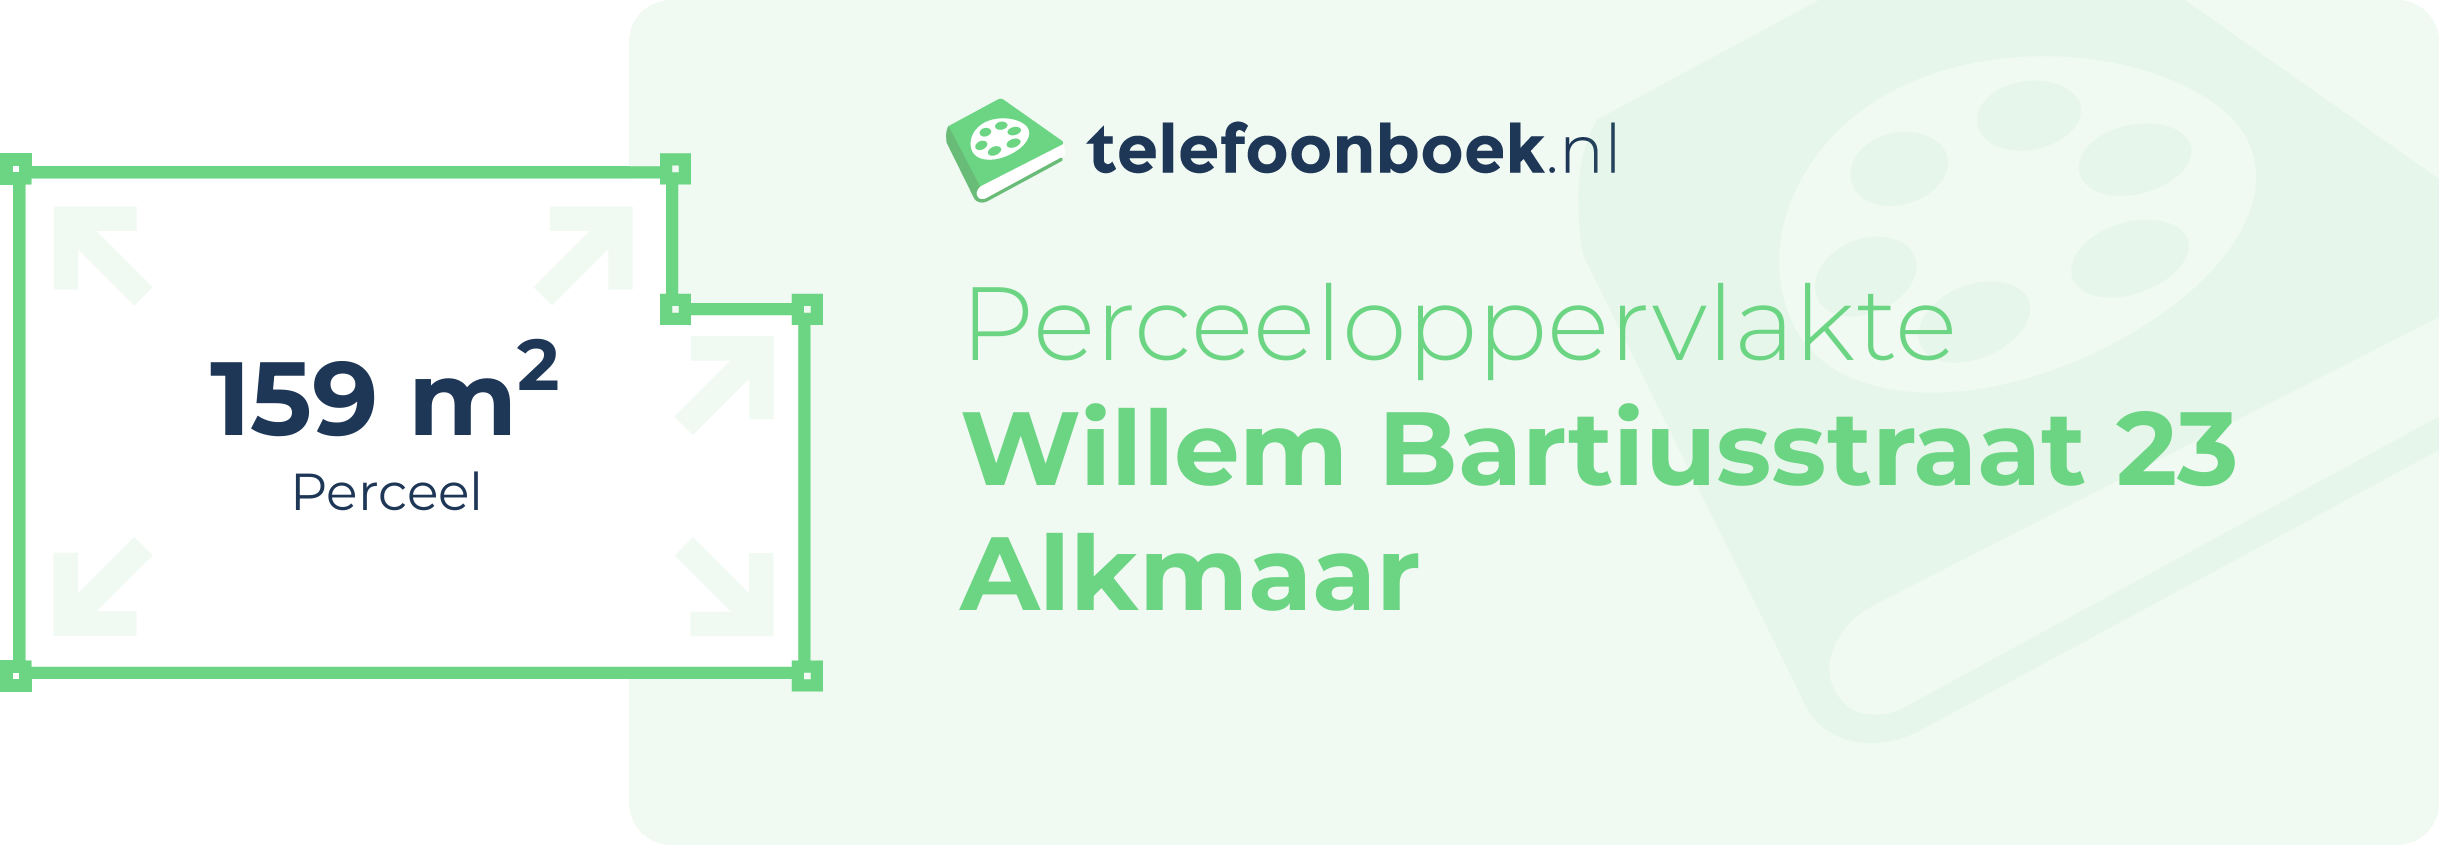 Perceeloppervlakte Willem Bartiusstraat 23 Alkmaar